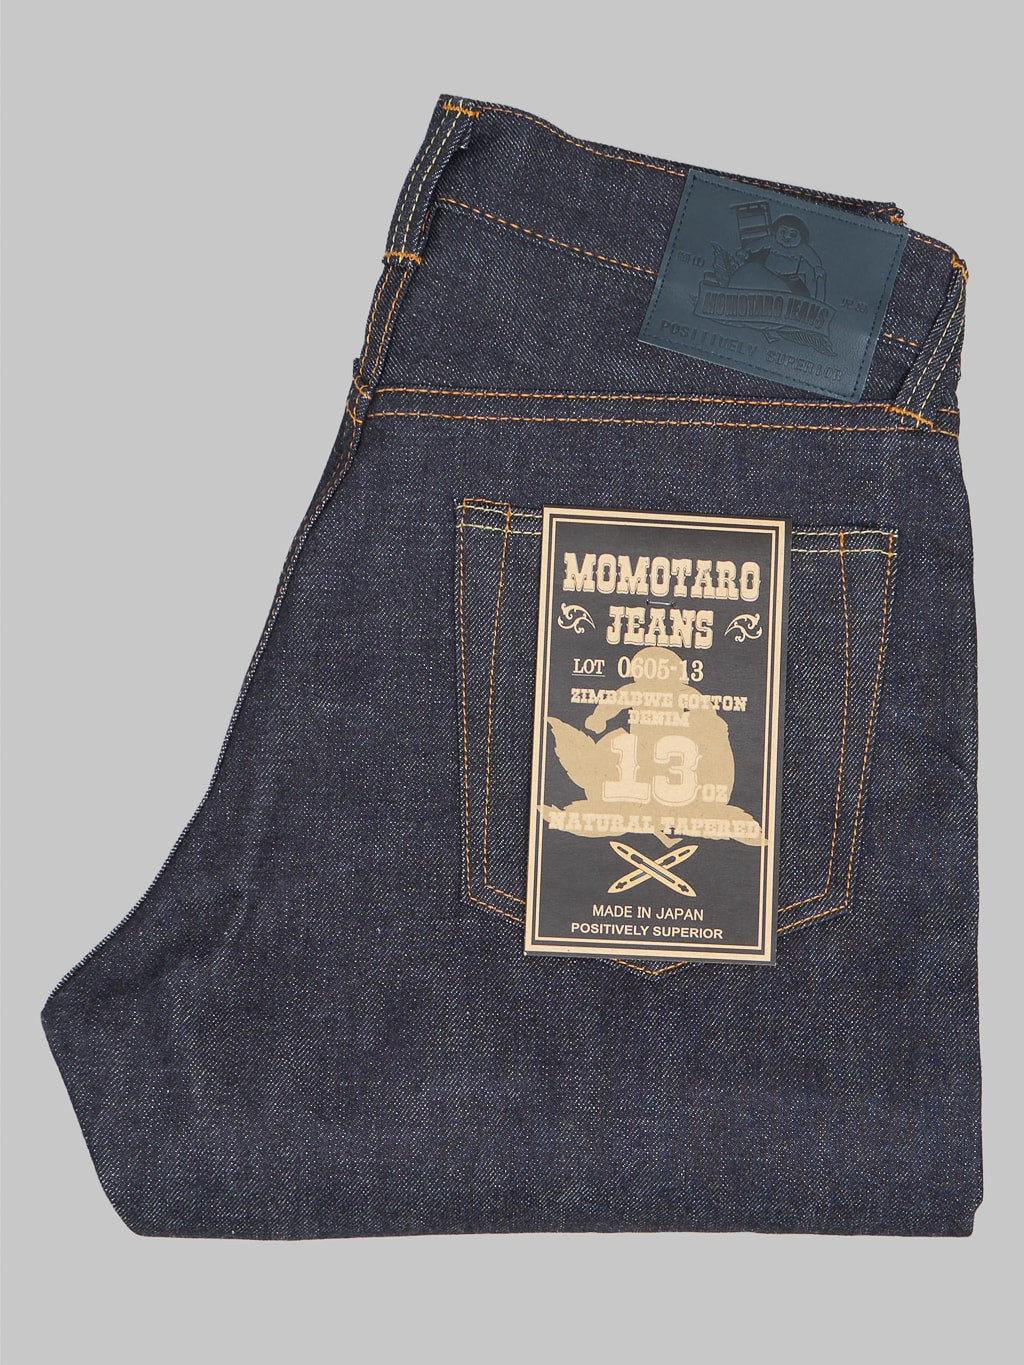 momotaro 0605 13 indigo jeans natural tapered 13oz